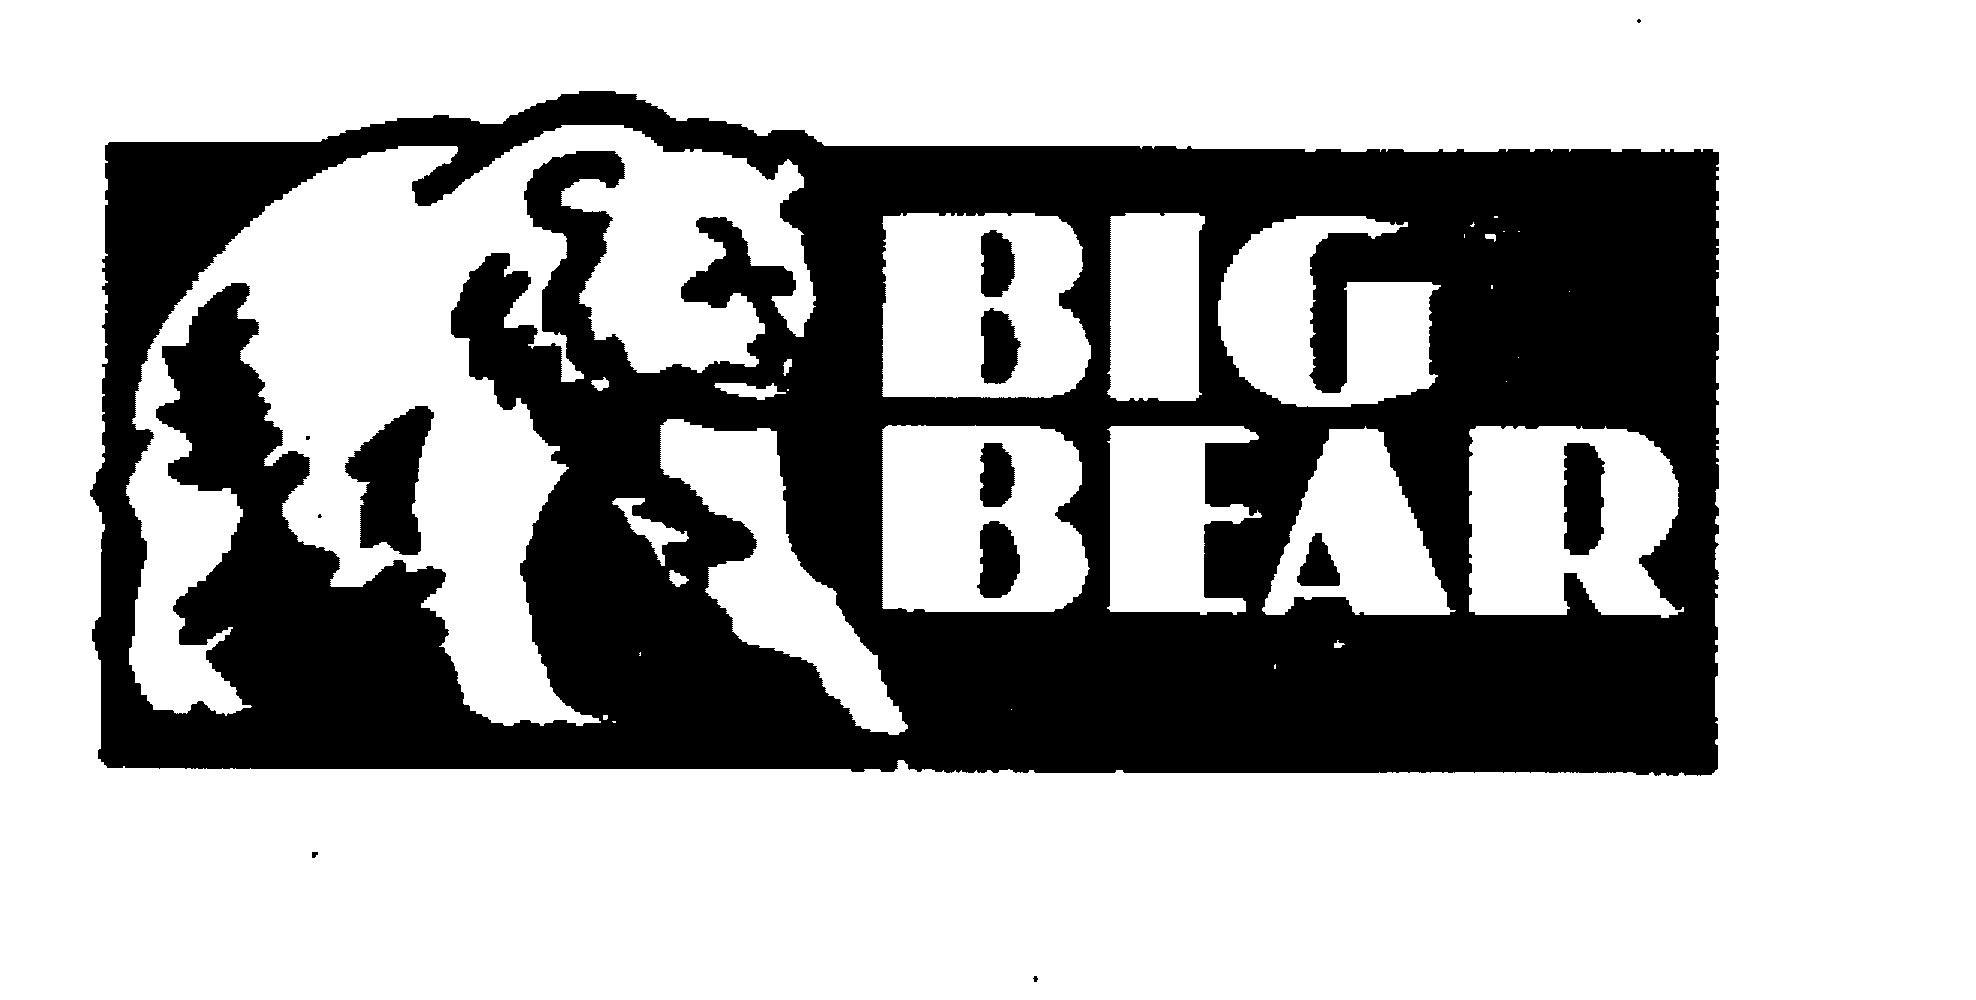 Trademark Logo BIG BEAR